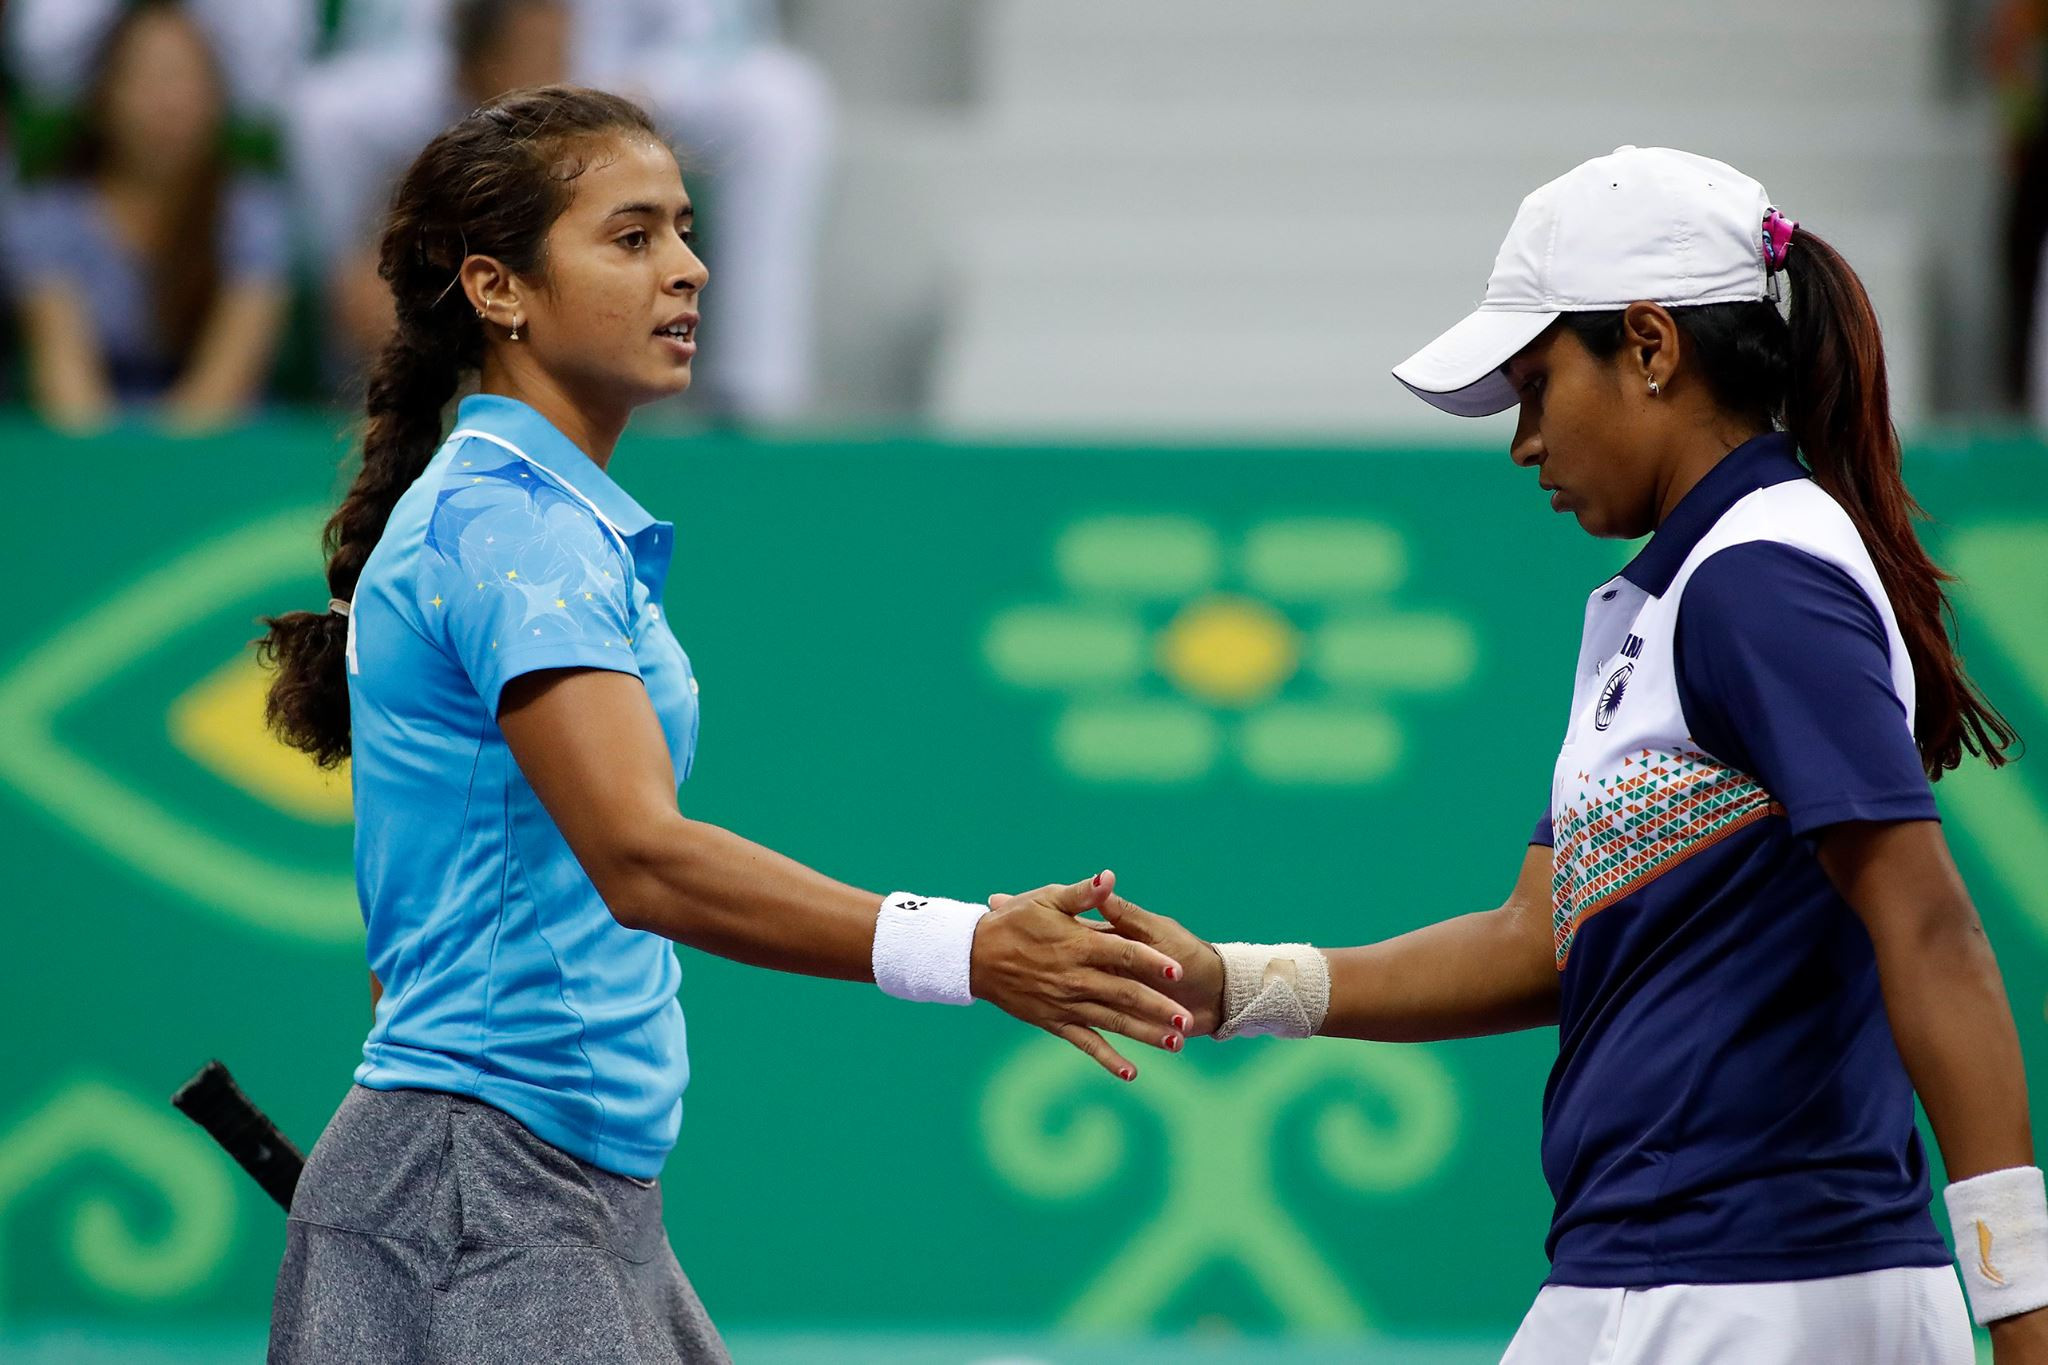 India's Ankita Raina and P. Thombare overcame Indonesia's Jessy Rompies and Lavinia Tananta in the women's doubles indoor tennis semi-finals ©Ashgabat 2017/Facebook